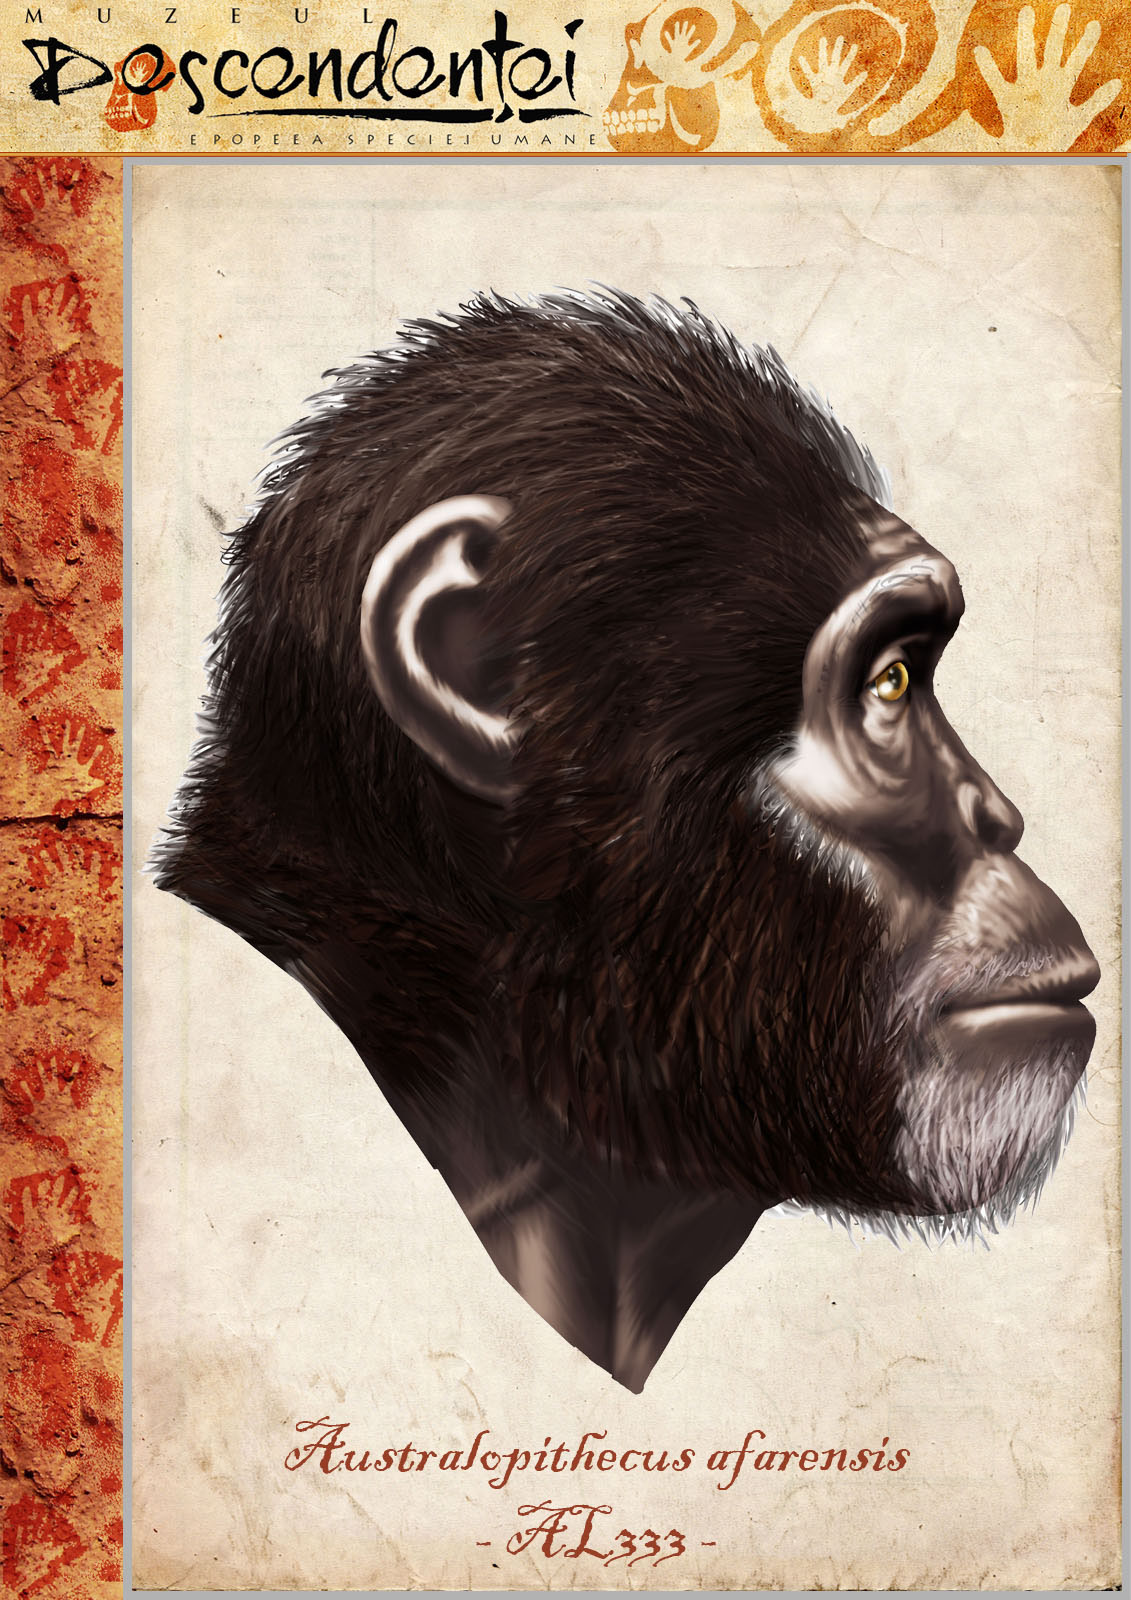 australopithecus afarensis human evolution hominid homo sahelanthropus ardipithecus neanderthal paranthropus habilis ergaster erectus antecessor floresiensis